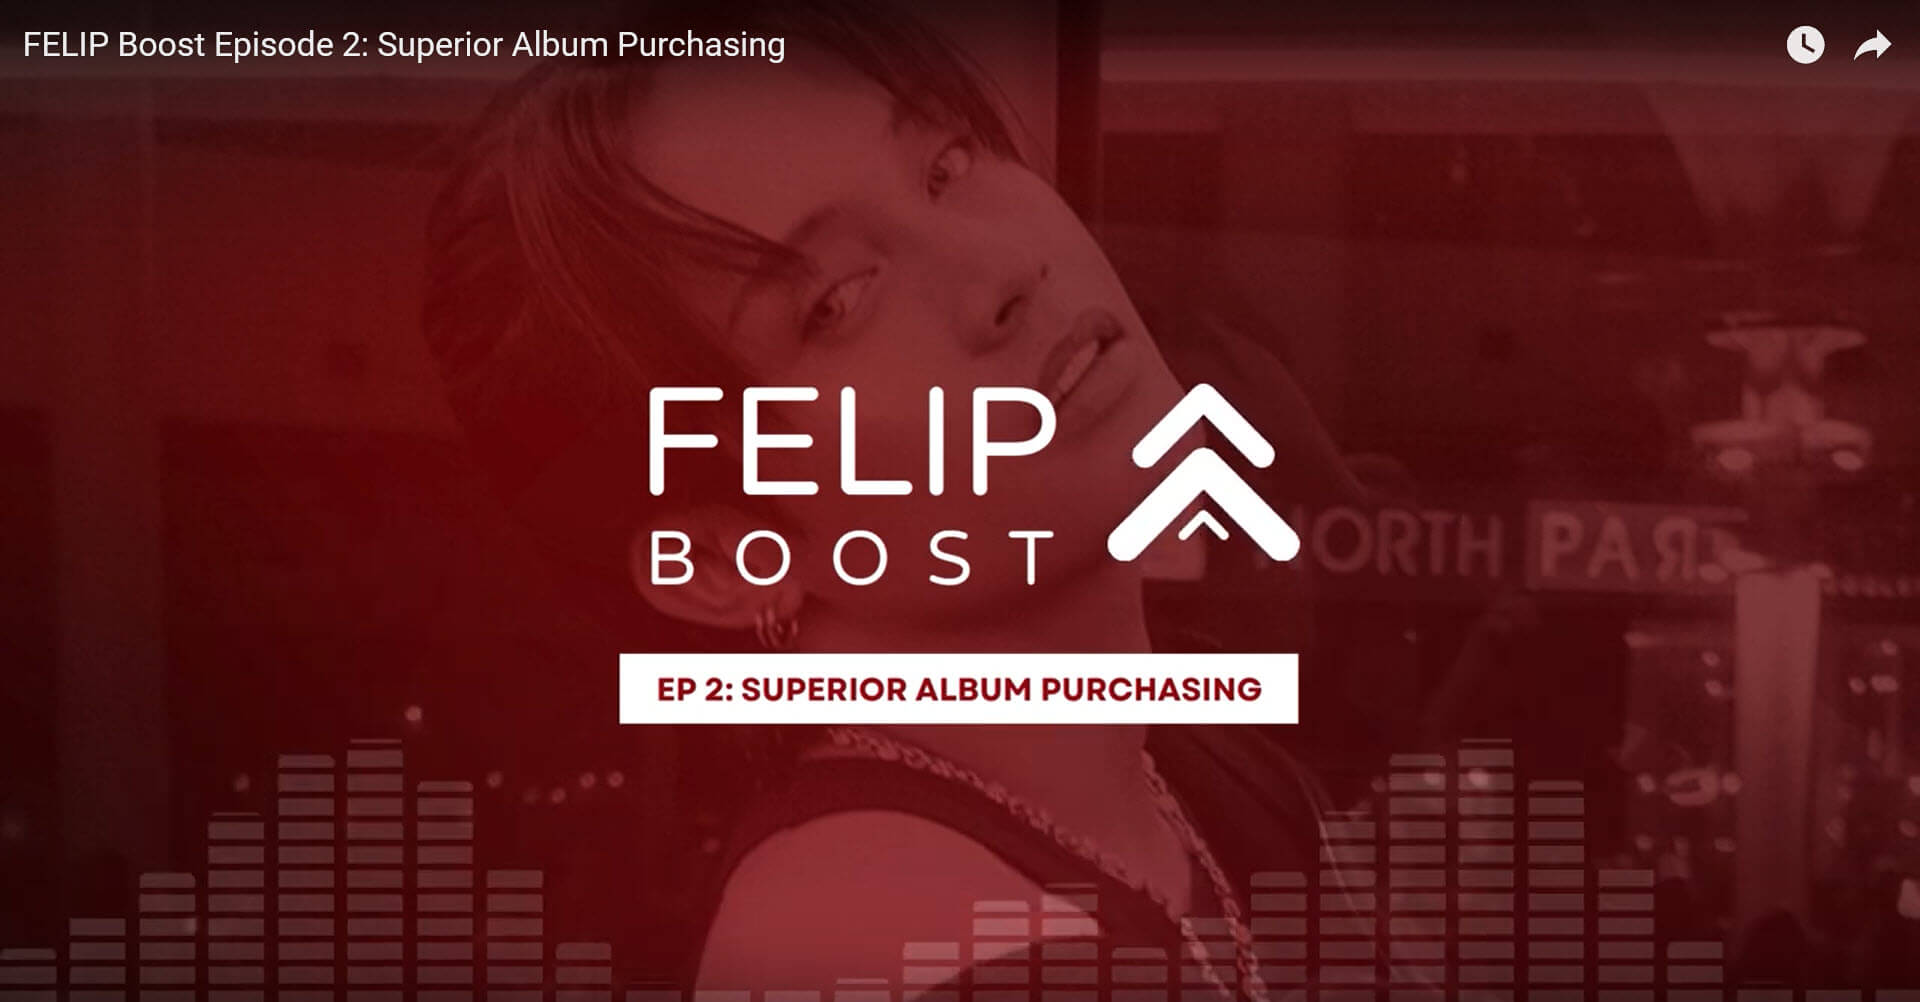 FELIP Bosst Episode 2 - Album Purchasing in iTunes